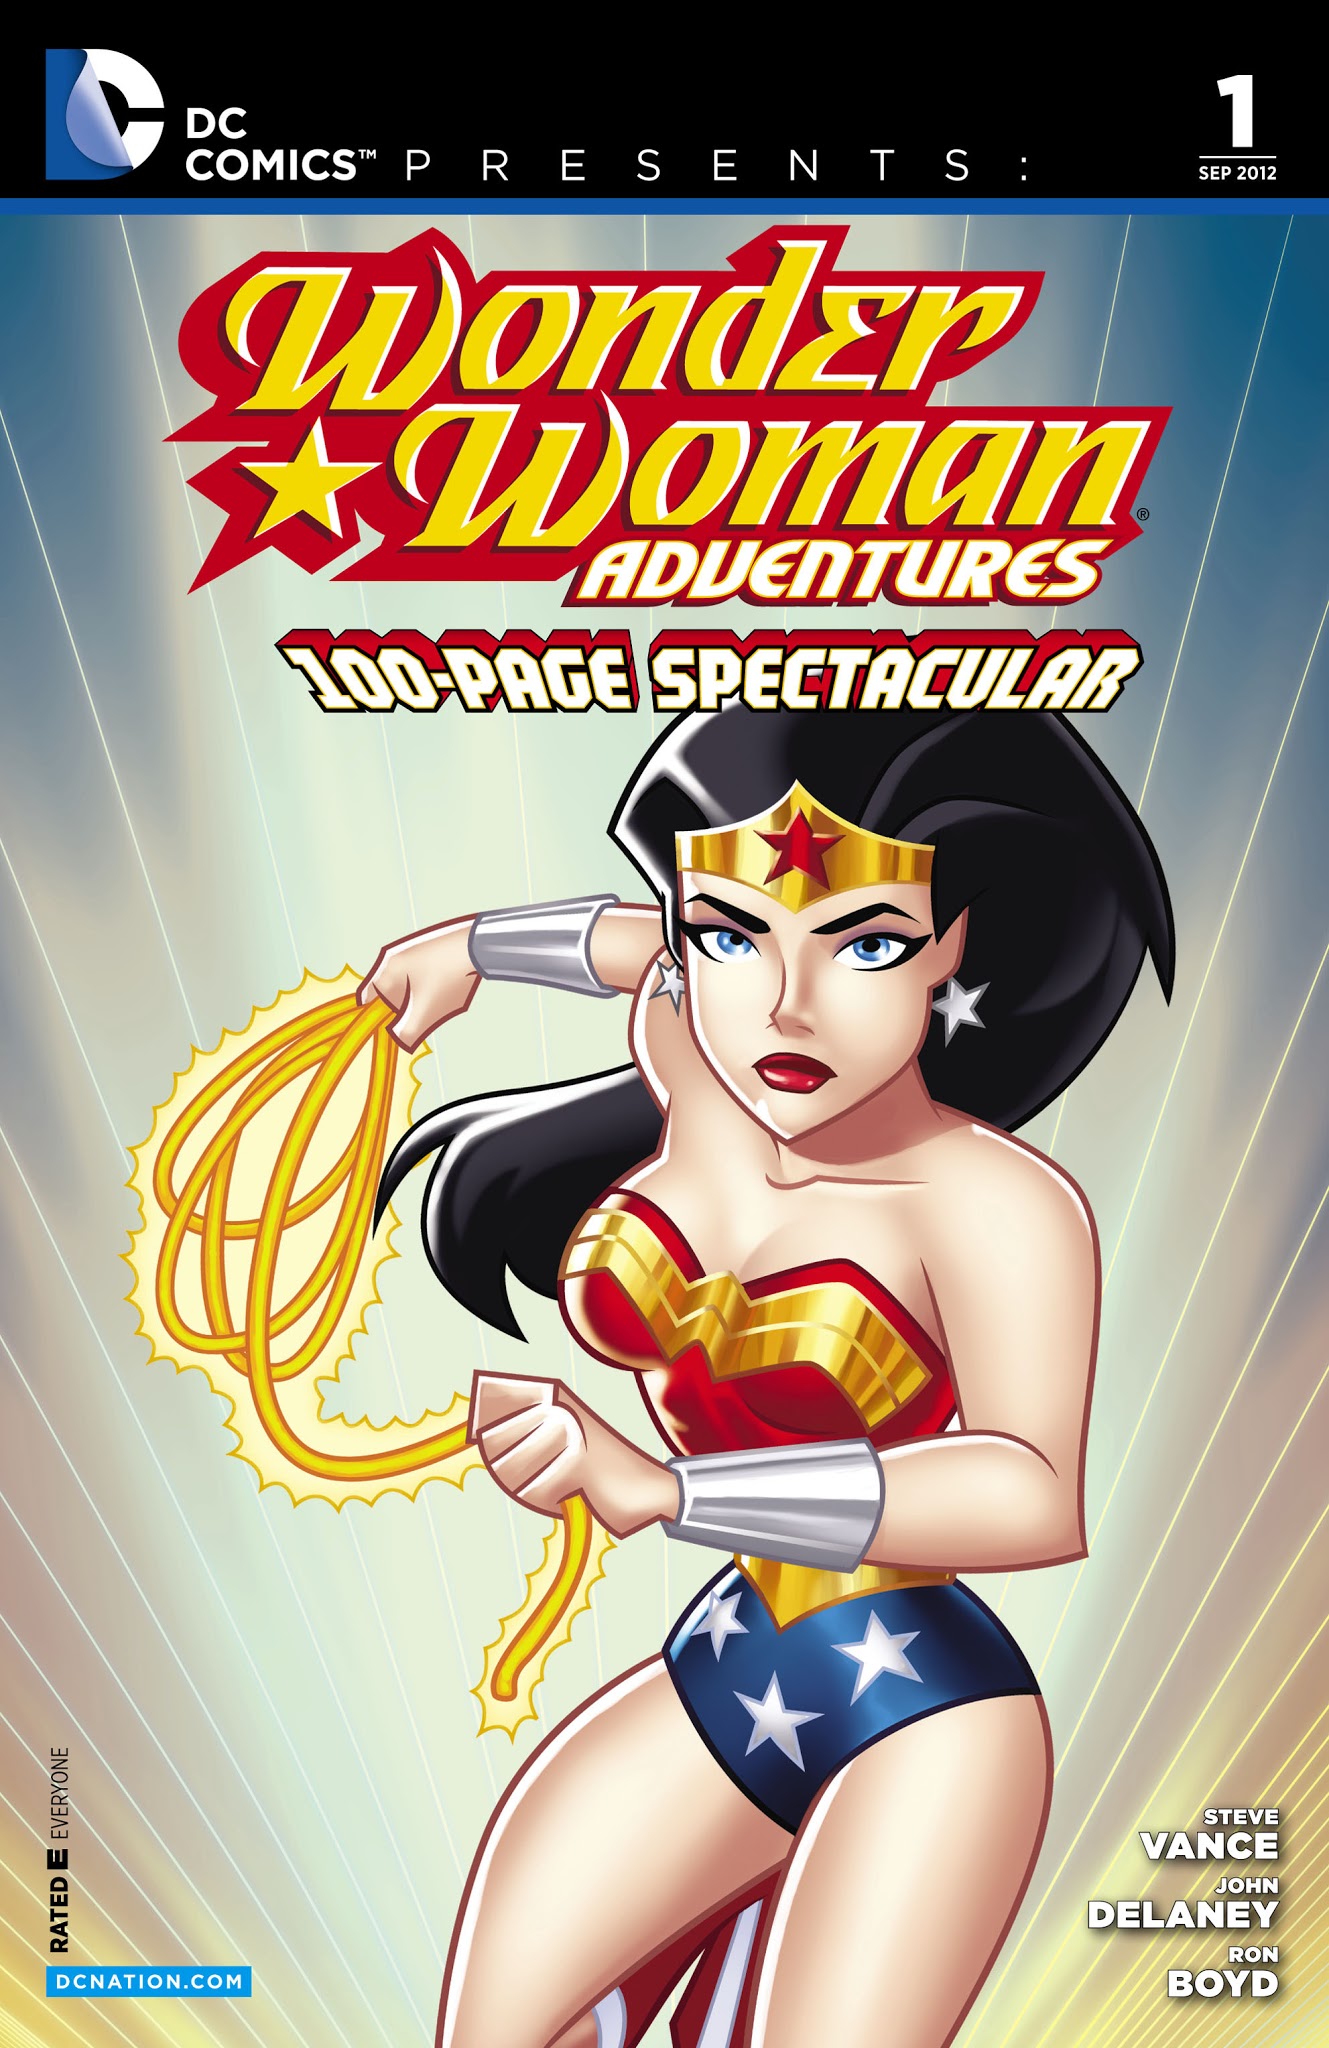 Read online DC Comics Presents: Wonder Woman Adventures comic -  Issue # Full - 1